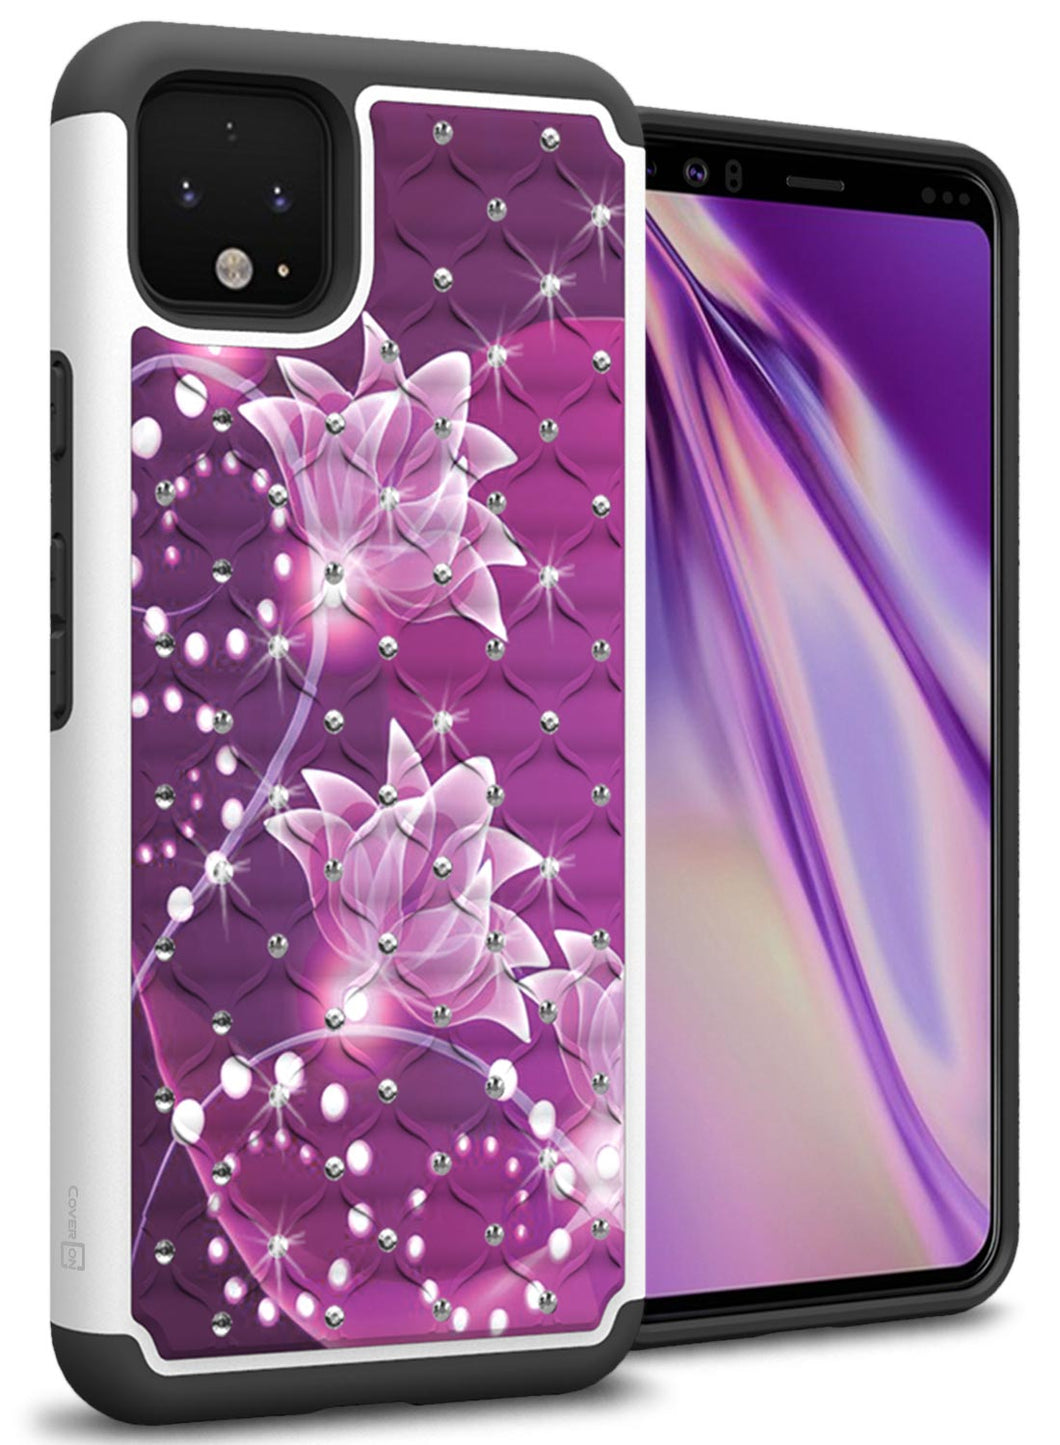 Google Pixel 4 XL Case - Rhinestone Bling Hybrid Phone Cover - Aurora Series